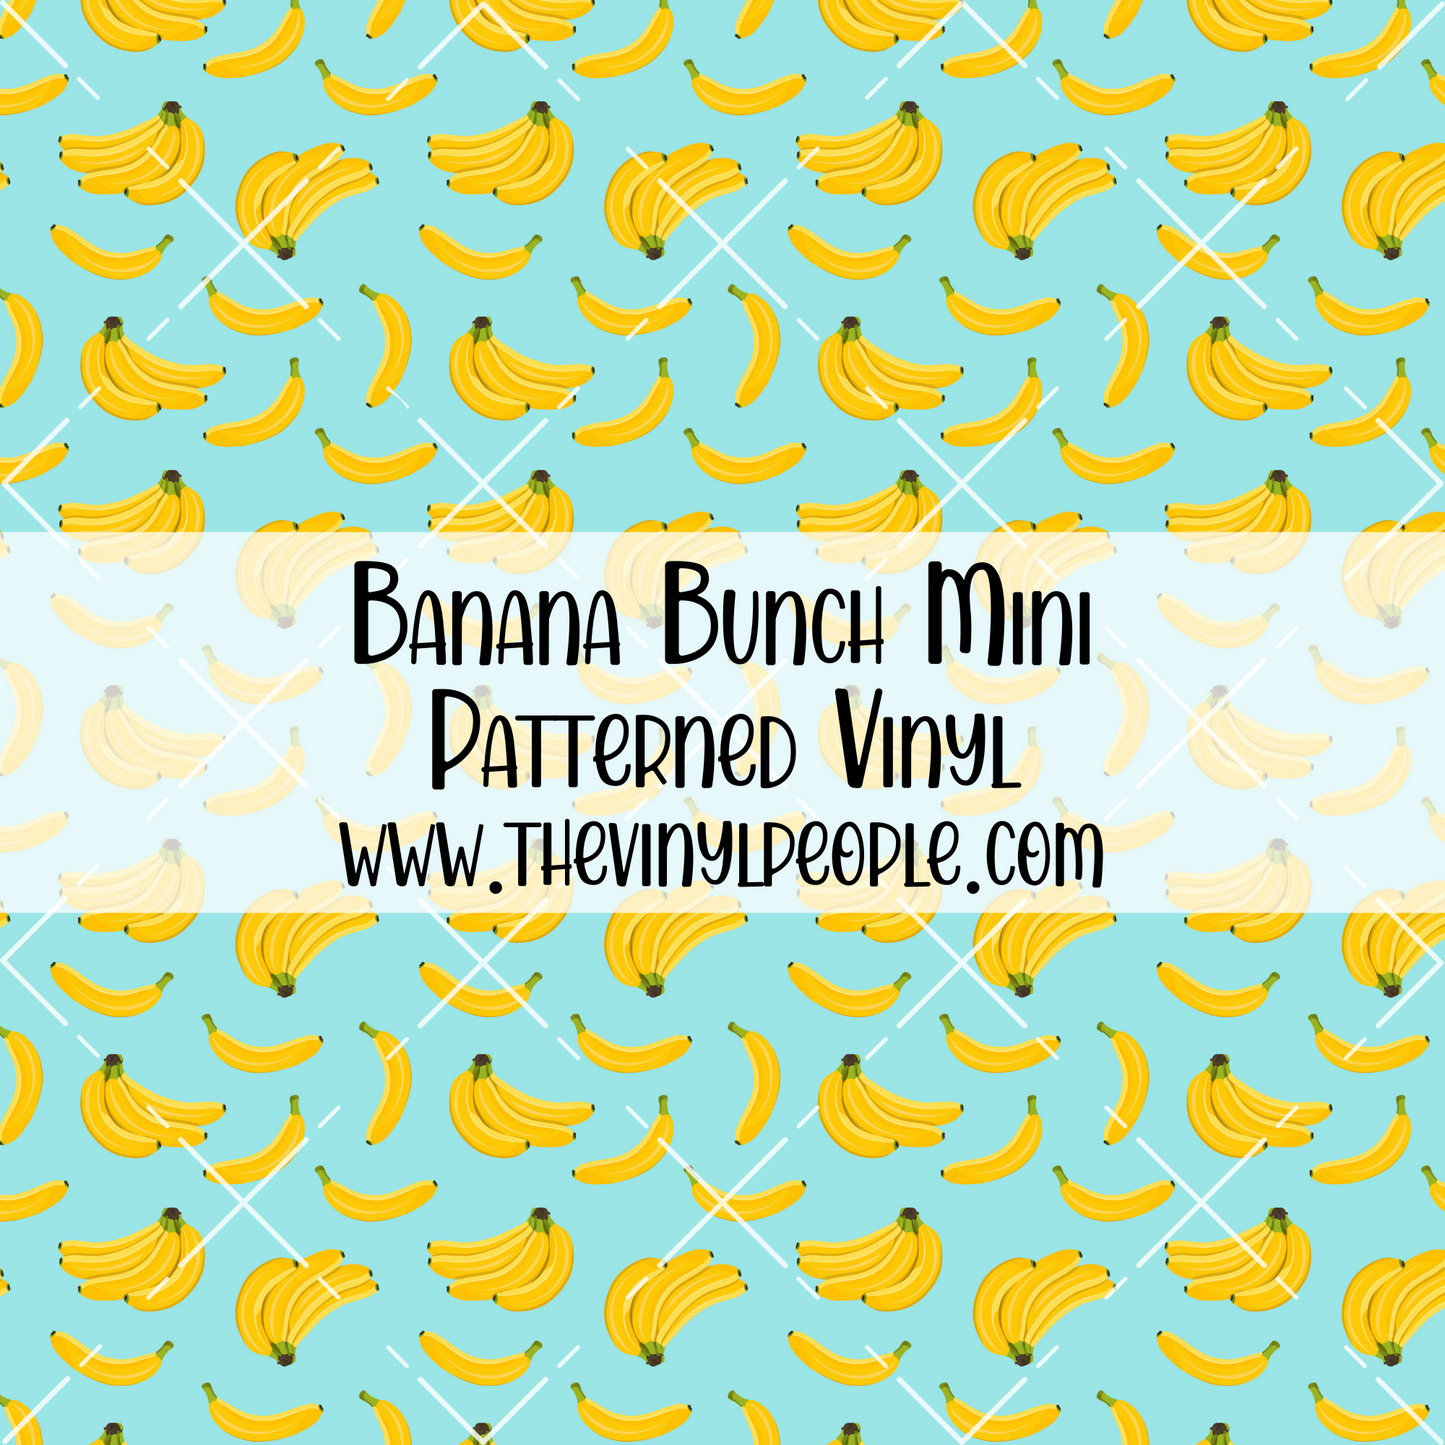 Banana Bunch Patterned Vinyl